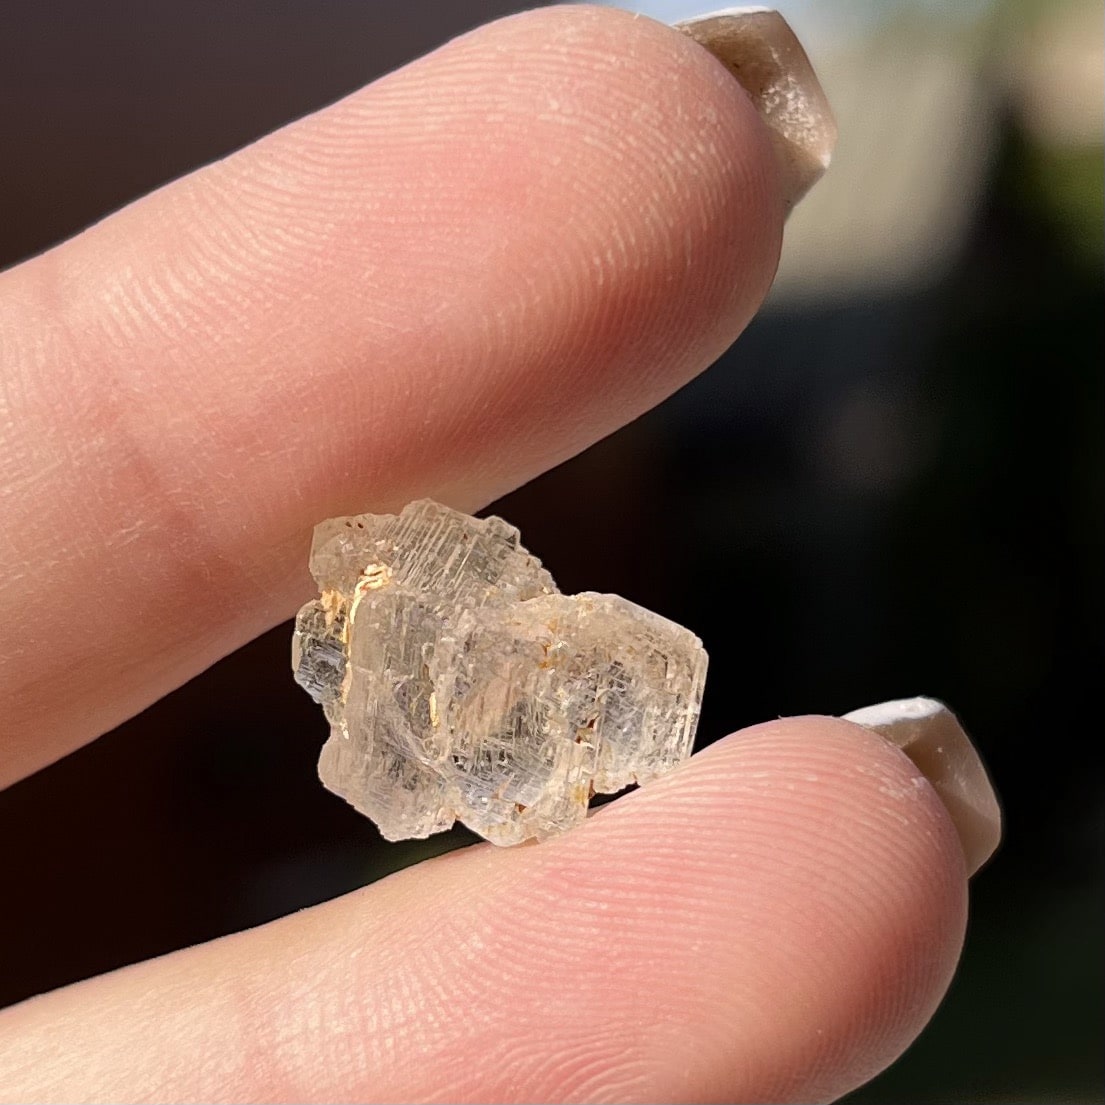 Fenacit nigerian cristal natural unicat b15